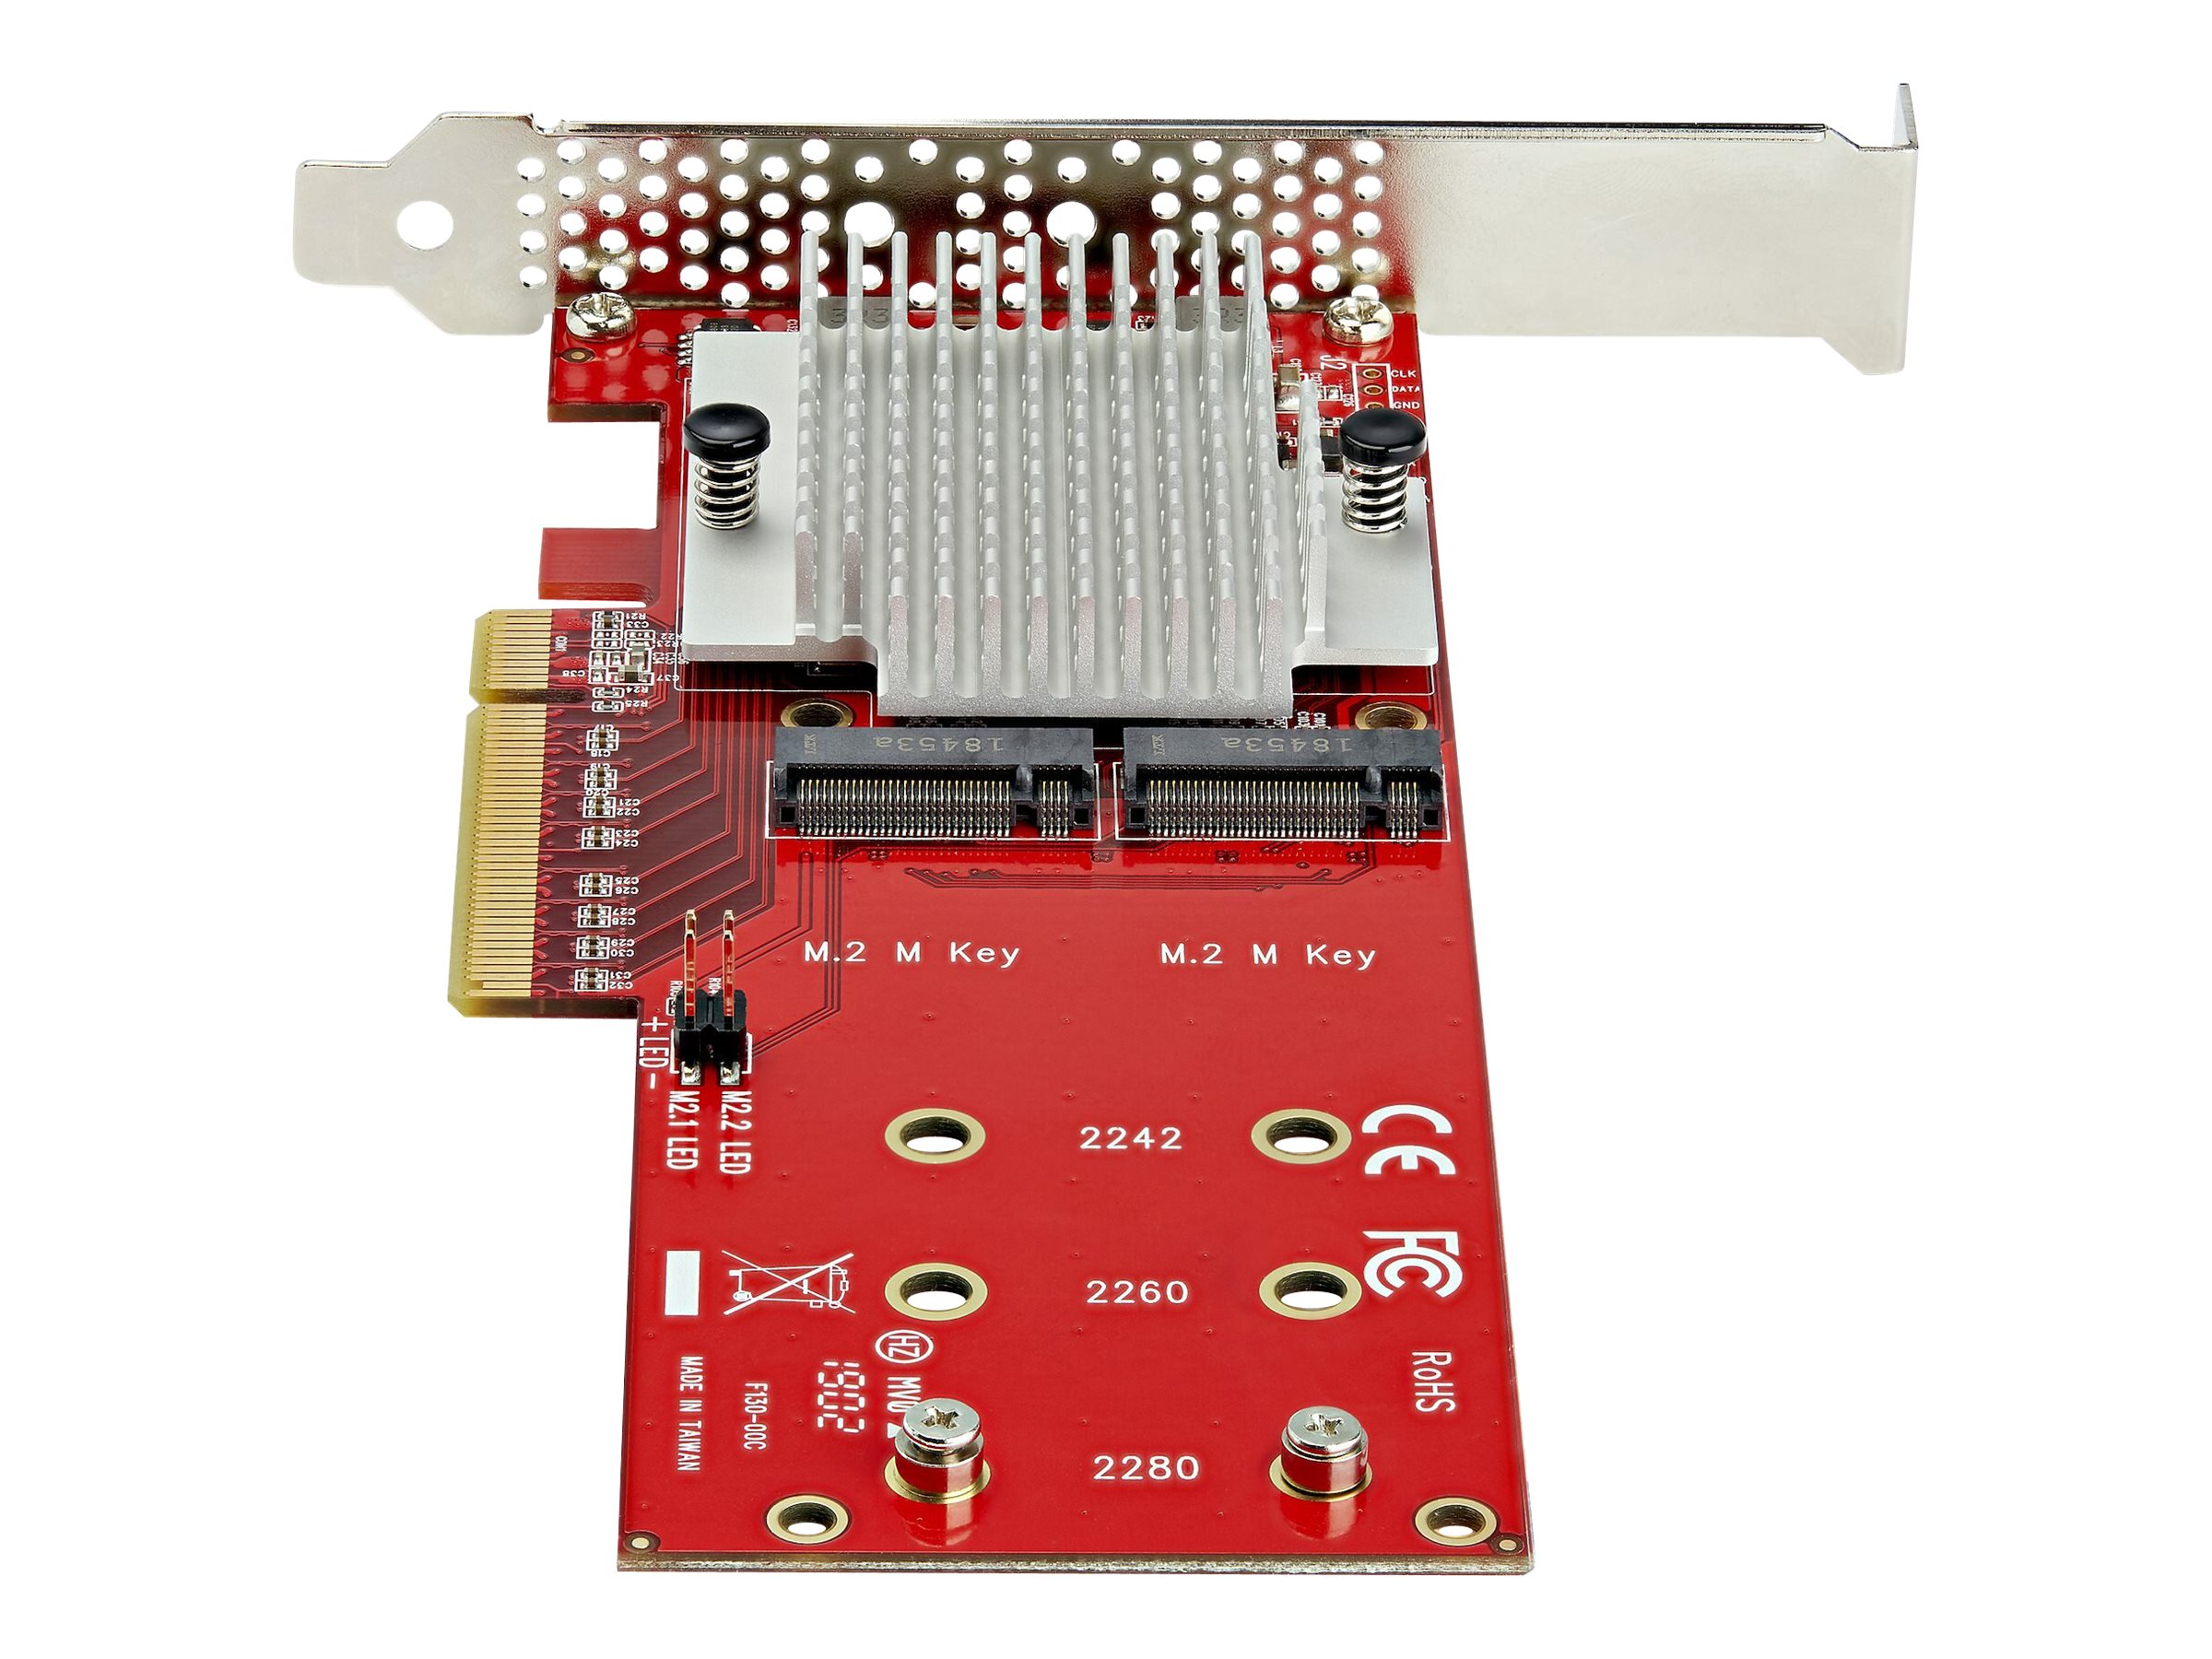 StarTech.com Dual M.2 PCIe SSD Adapter Karte - x8 / x16 Dual NVMe oder AHCI M.2 SSD zu PCI Express 3.0 - M.2 NGFF PCIe (M-Key) kompatibel - Unterstützt 2242, 2260, 2280 - JBOD - Mac & PC (PEX8M2E2)